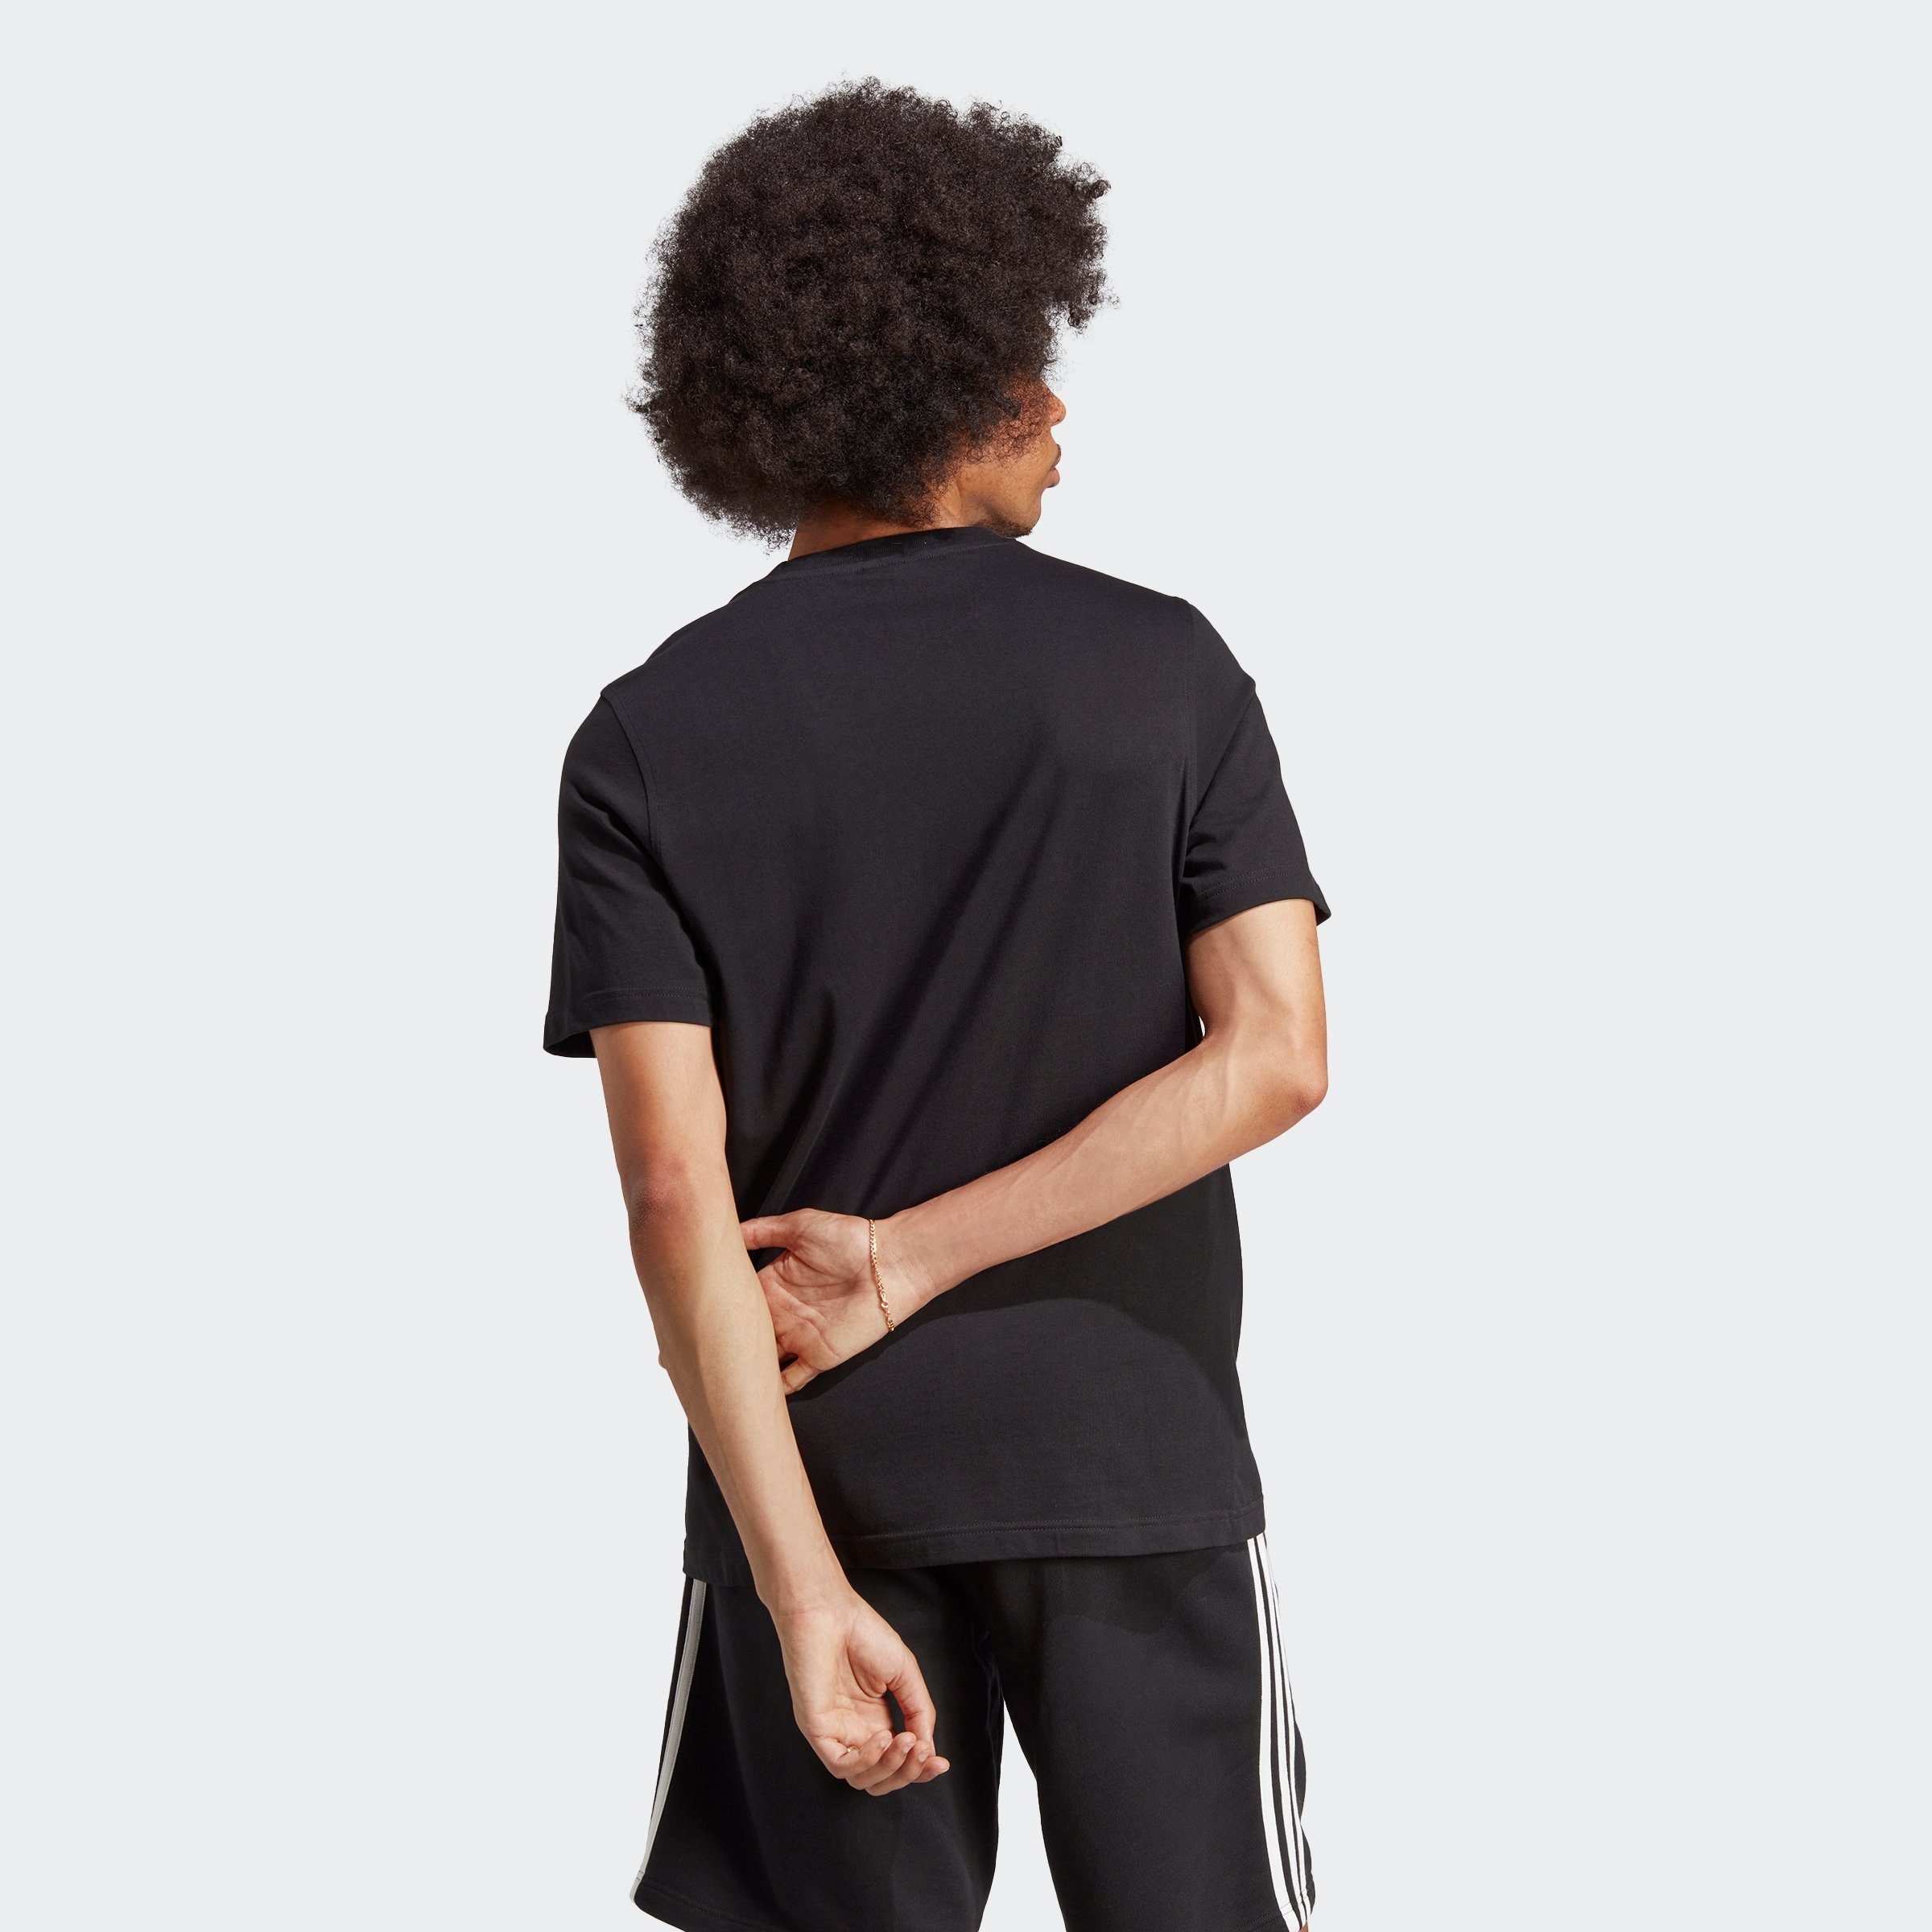 CLASSICS Black Originals TREFOIL T-Shirt ADICOLOR adidas